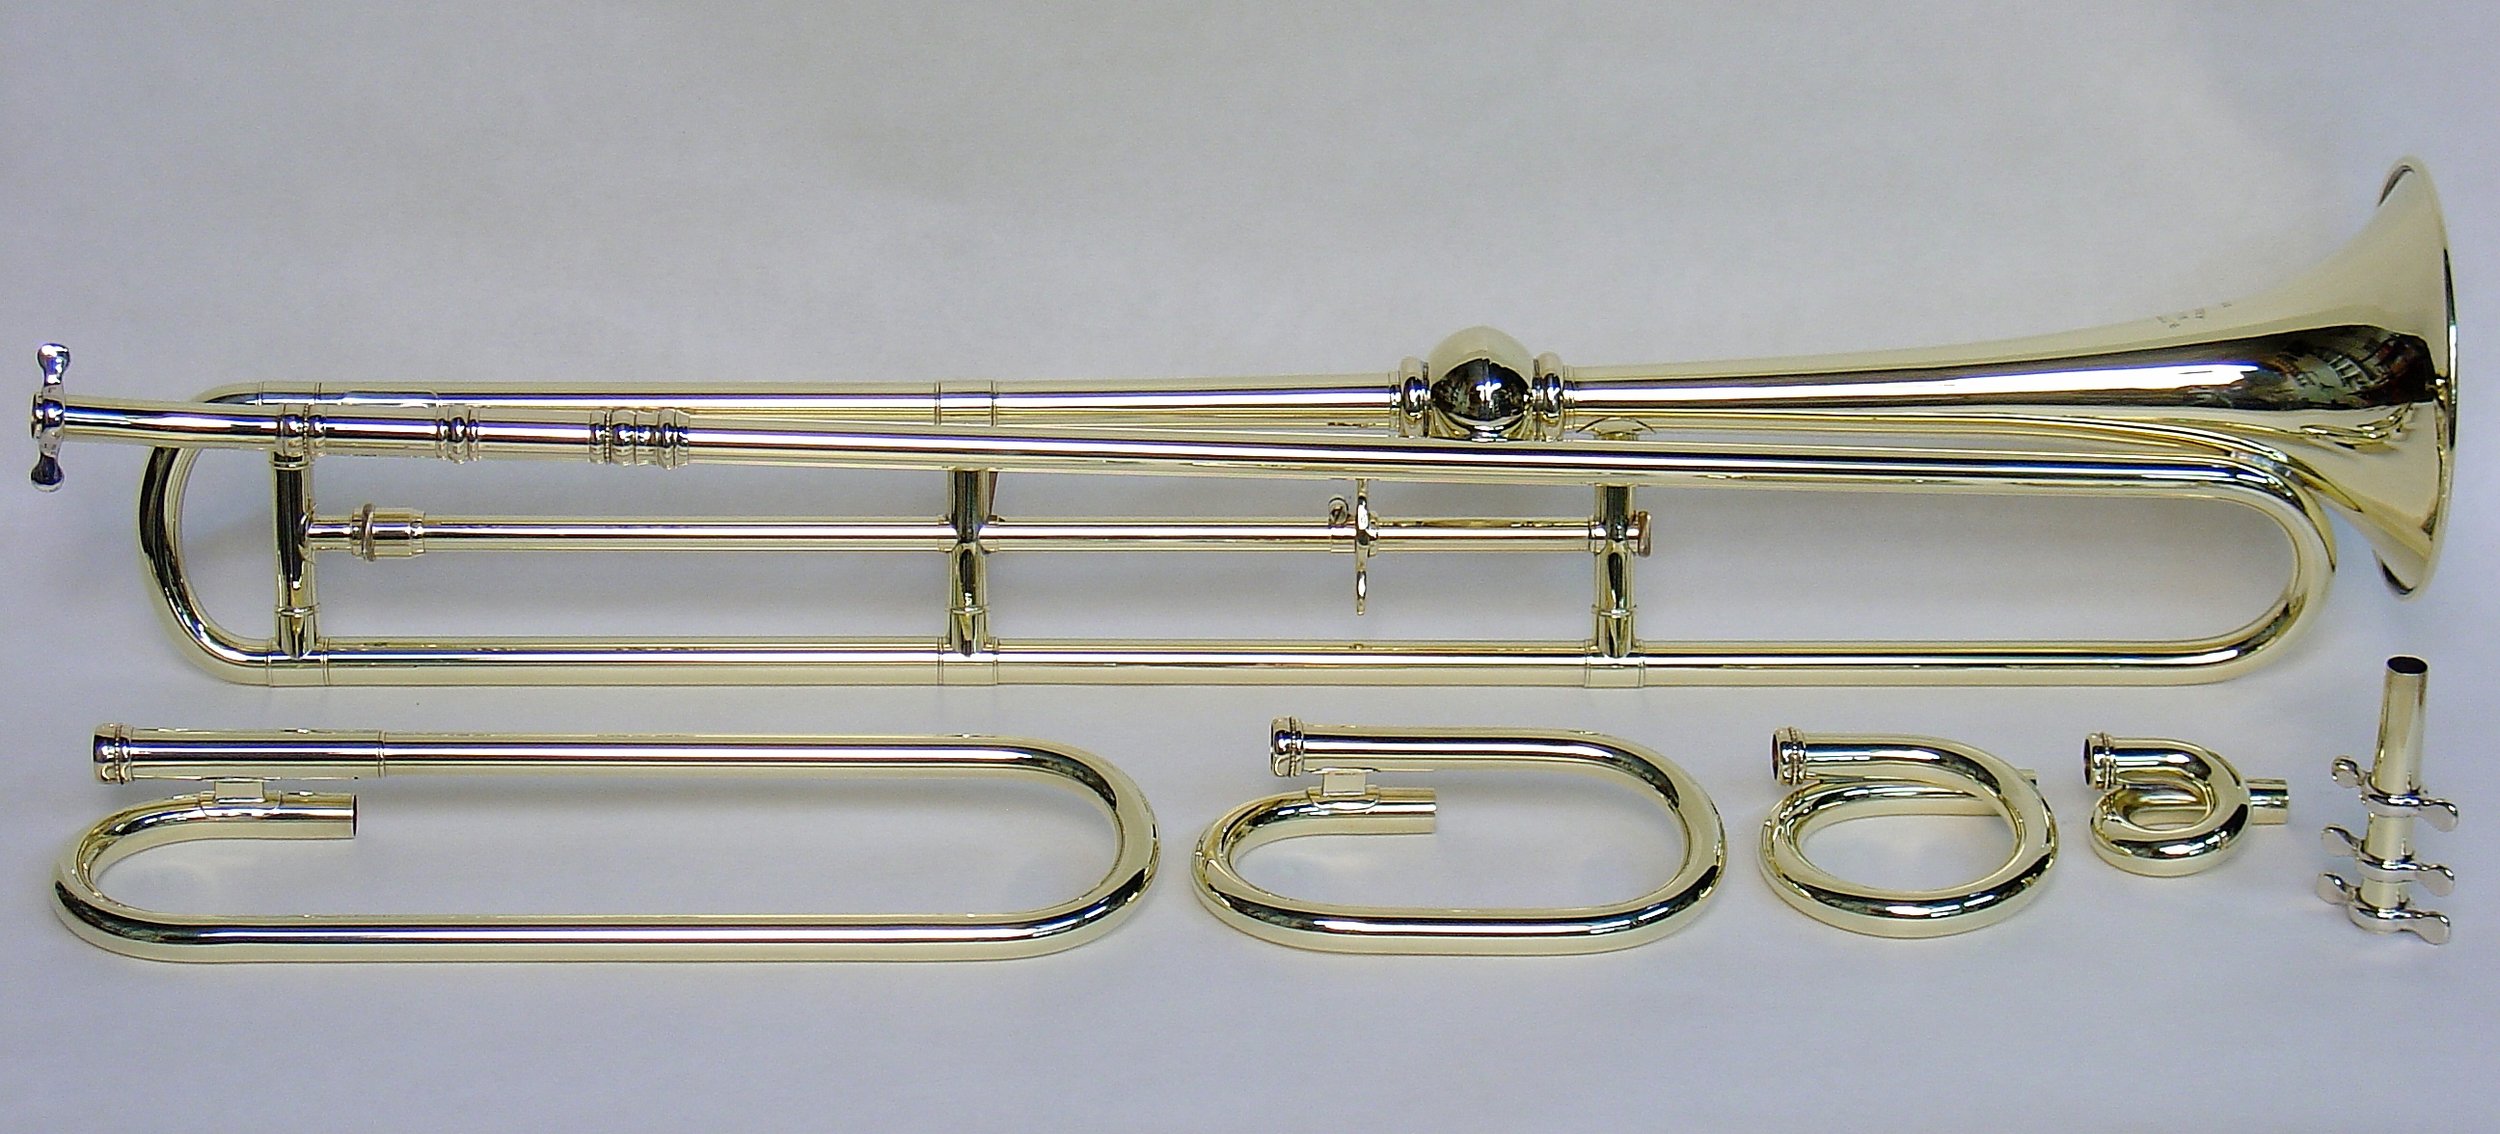 English Slide Trumpet Replica